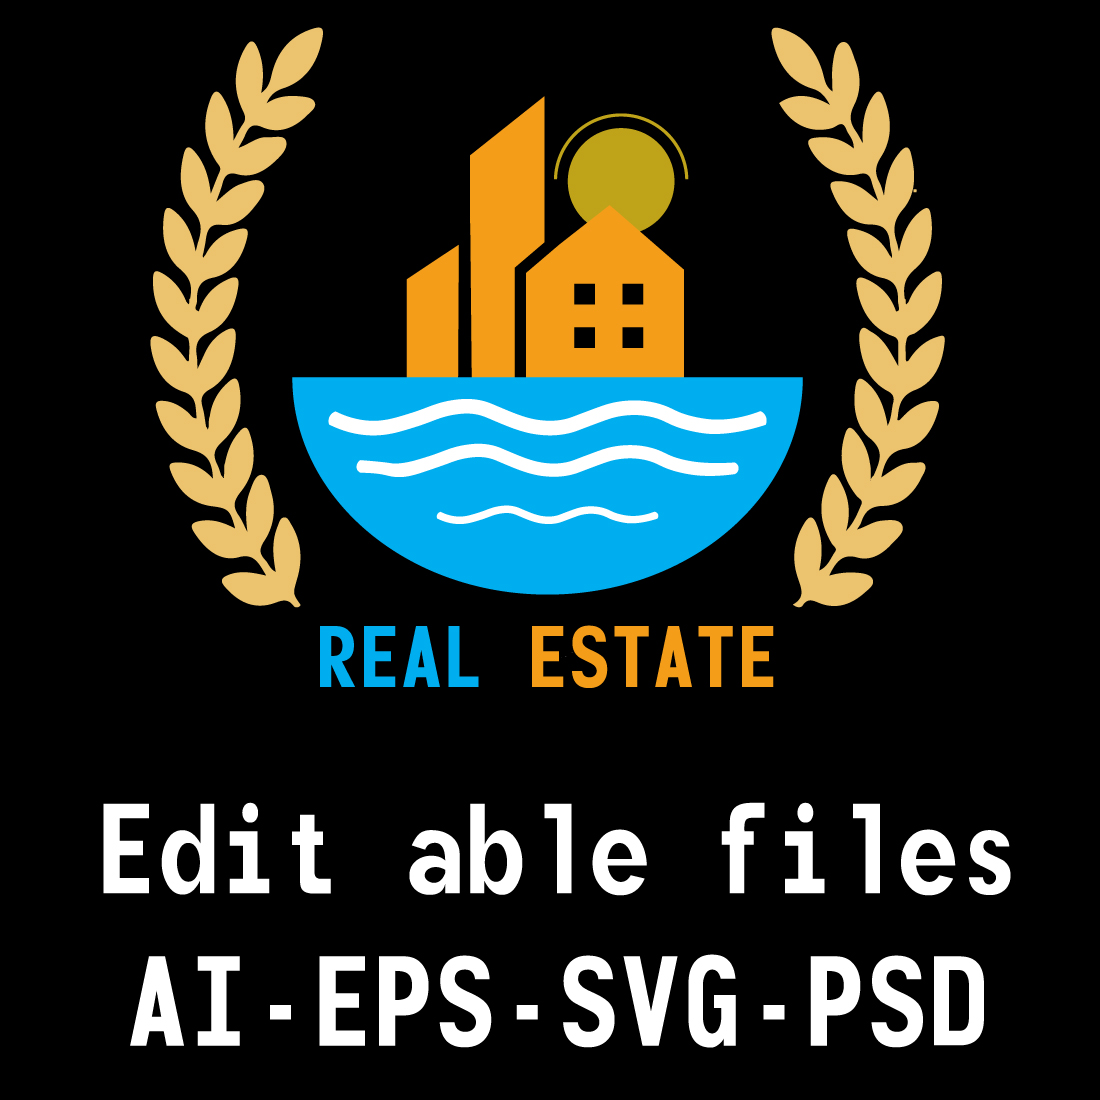 modern real estate logo preview image.